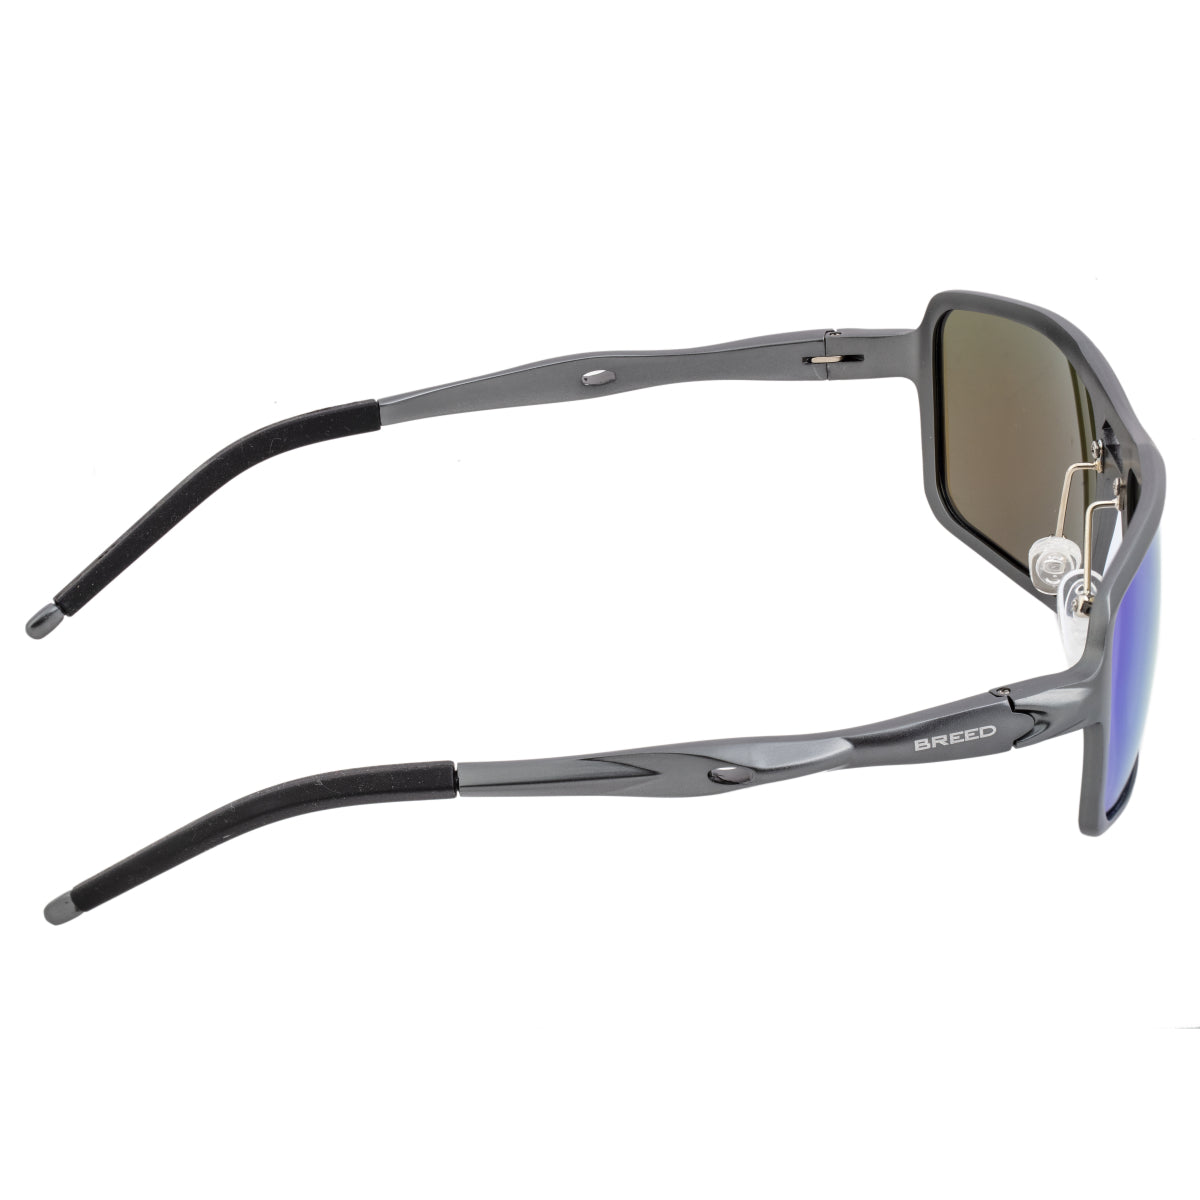 Breed Orpheus Aluminum Polarized Sunglasses - Gunmetal/Blue - BSG062BL